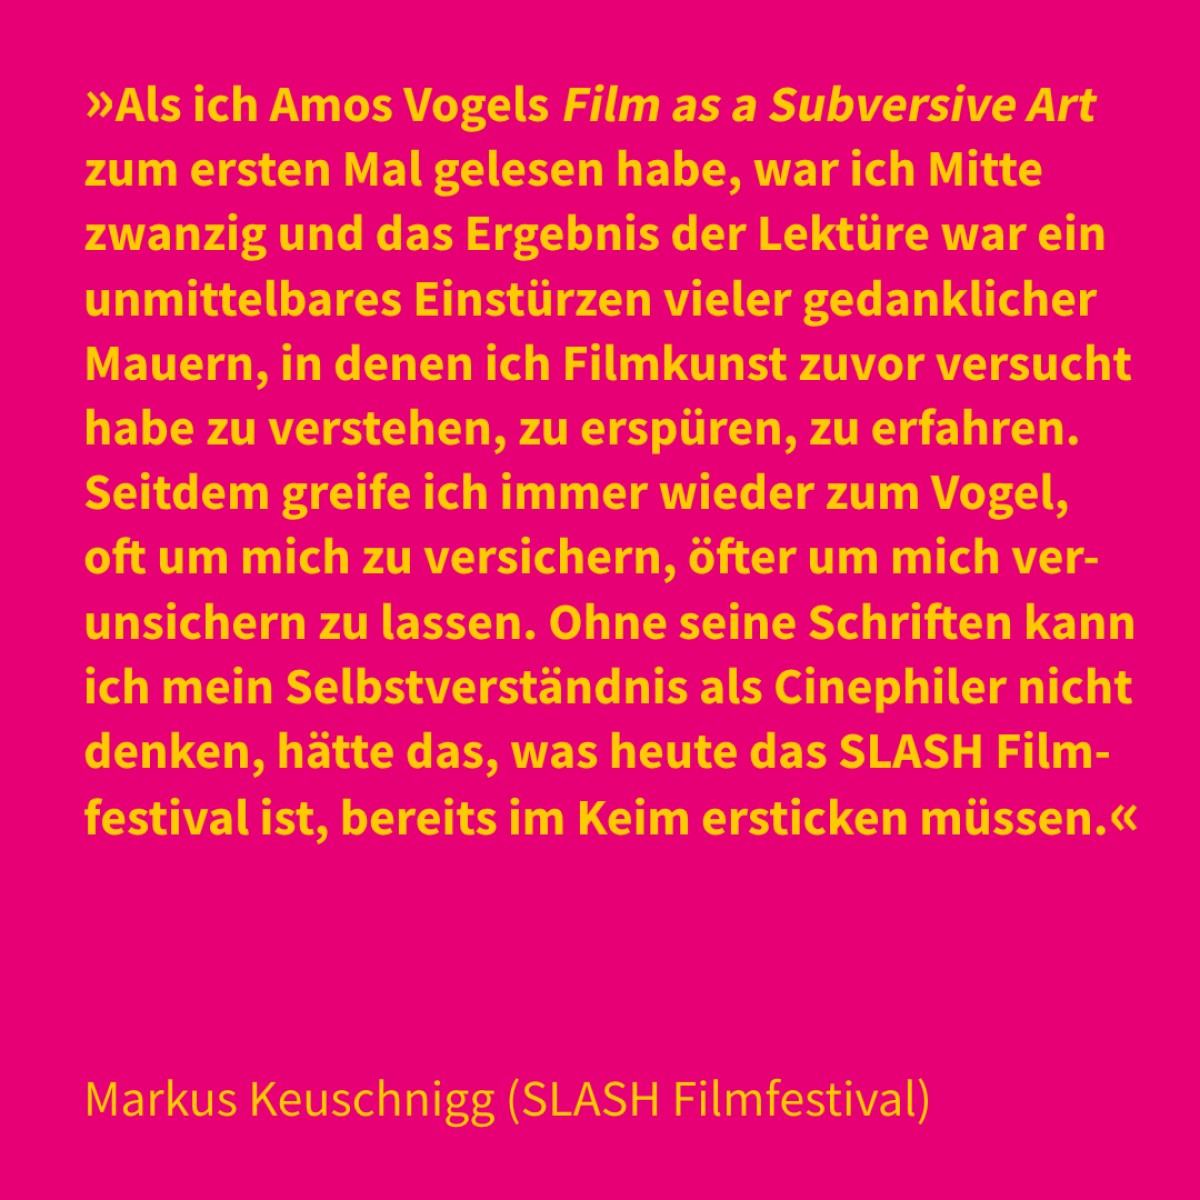 Markus Keuschnigg (SLASH Filmfestival)